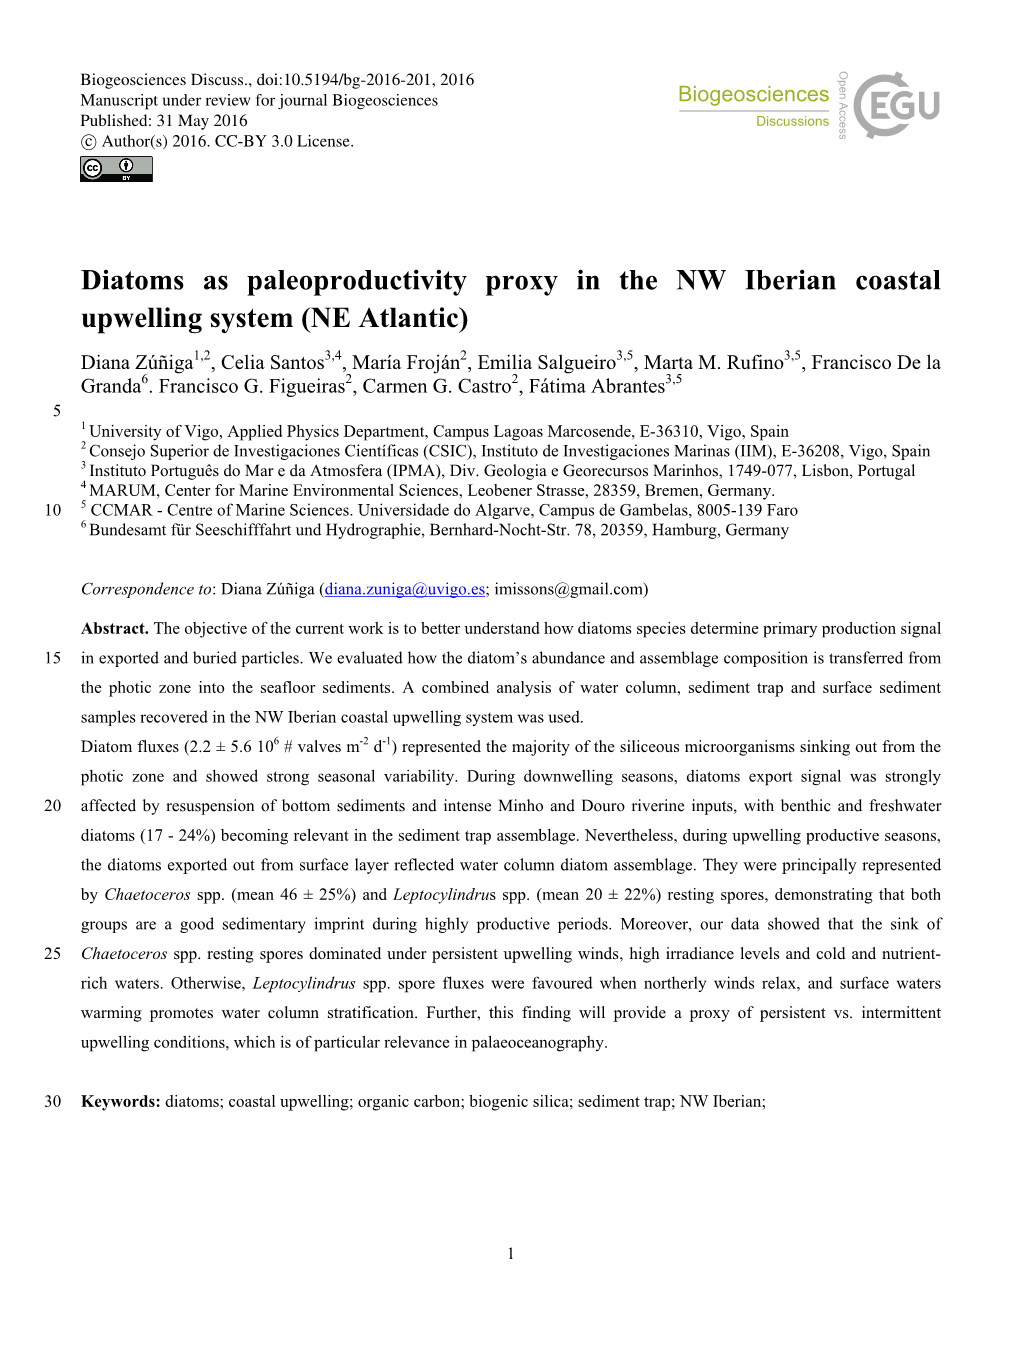 Diatoms As Paleoproductivity Proxy in the NW Iberian Coastal Upwelling